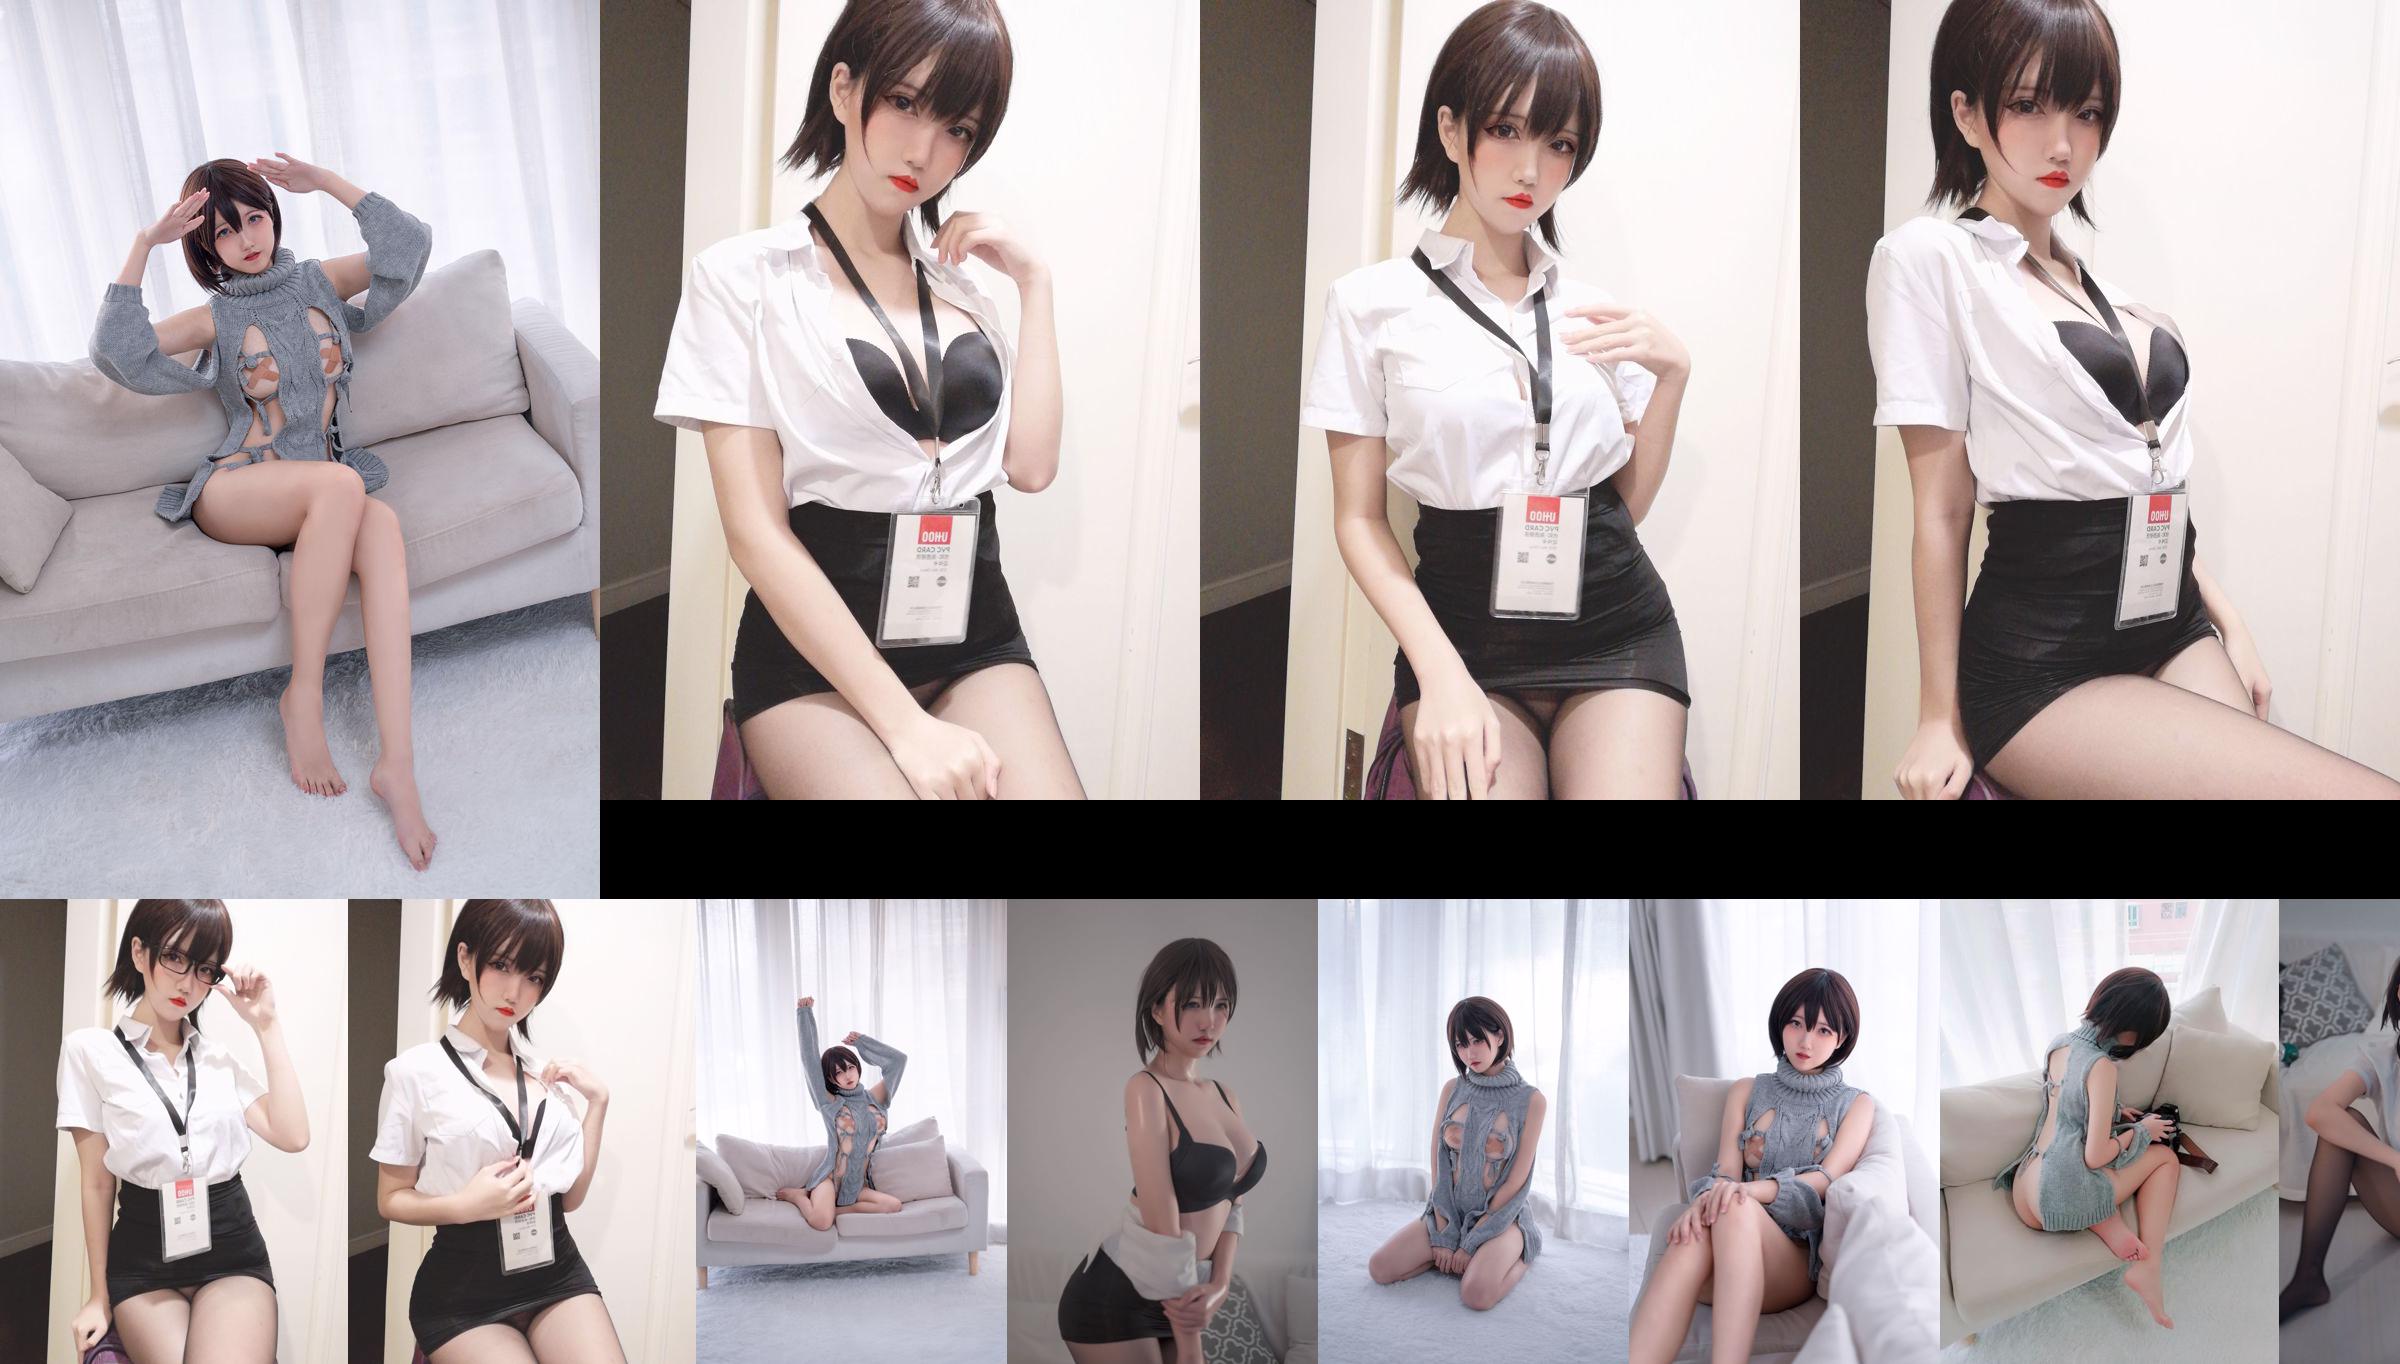 [Internet celebrity COSER photo] Ghostly girl A Xun kaOri - uniform No.d8345e Page 1